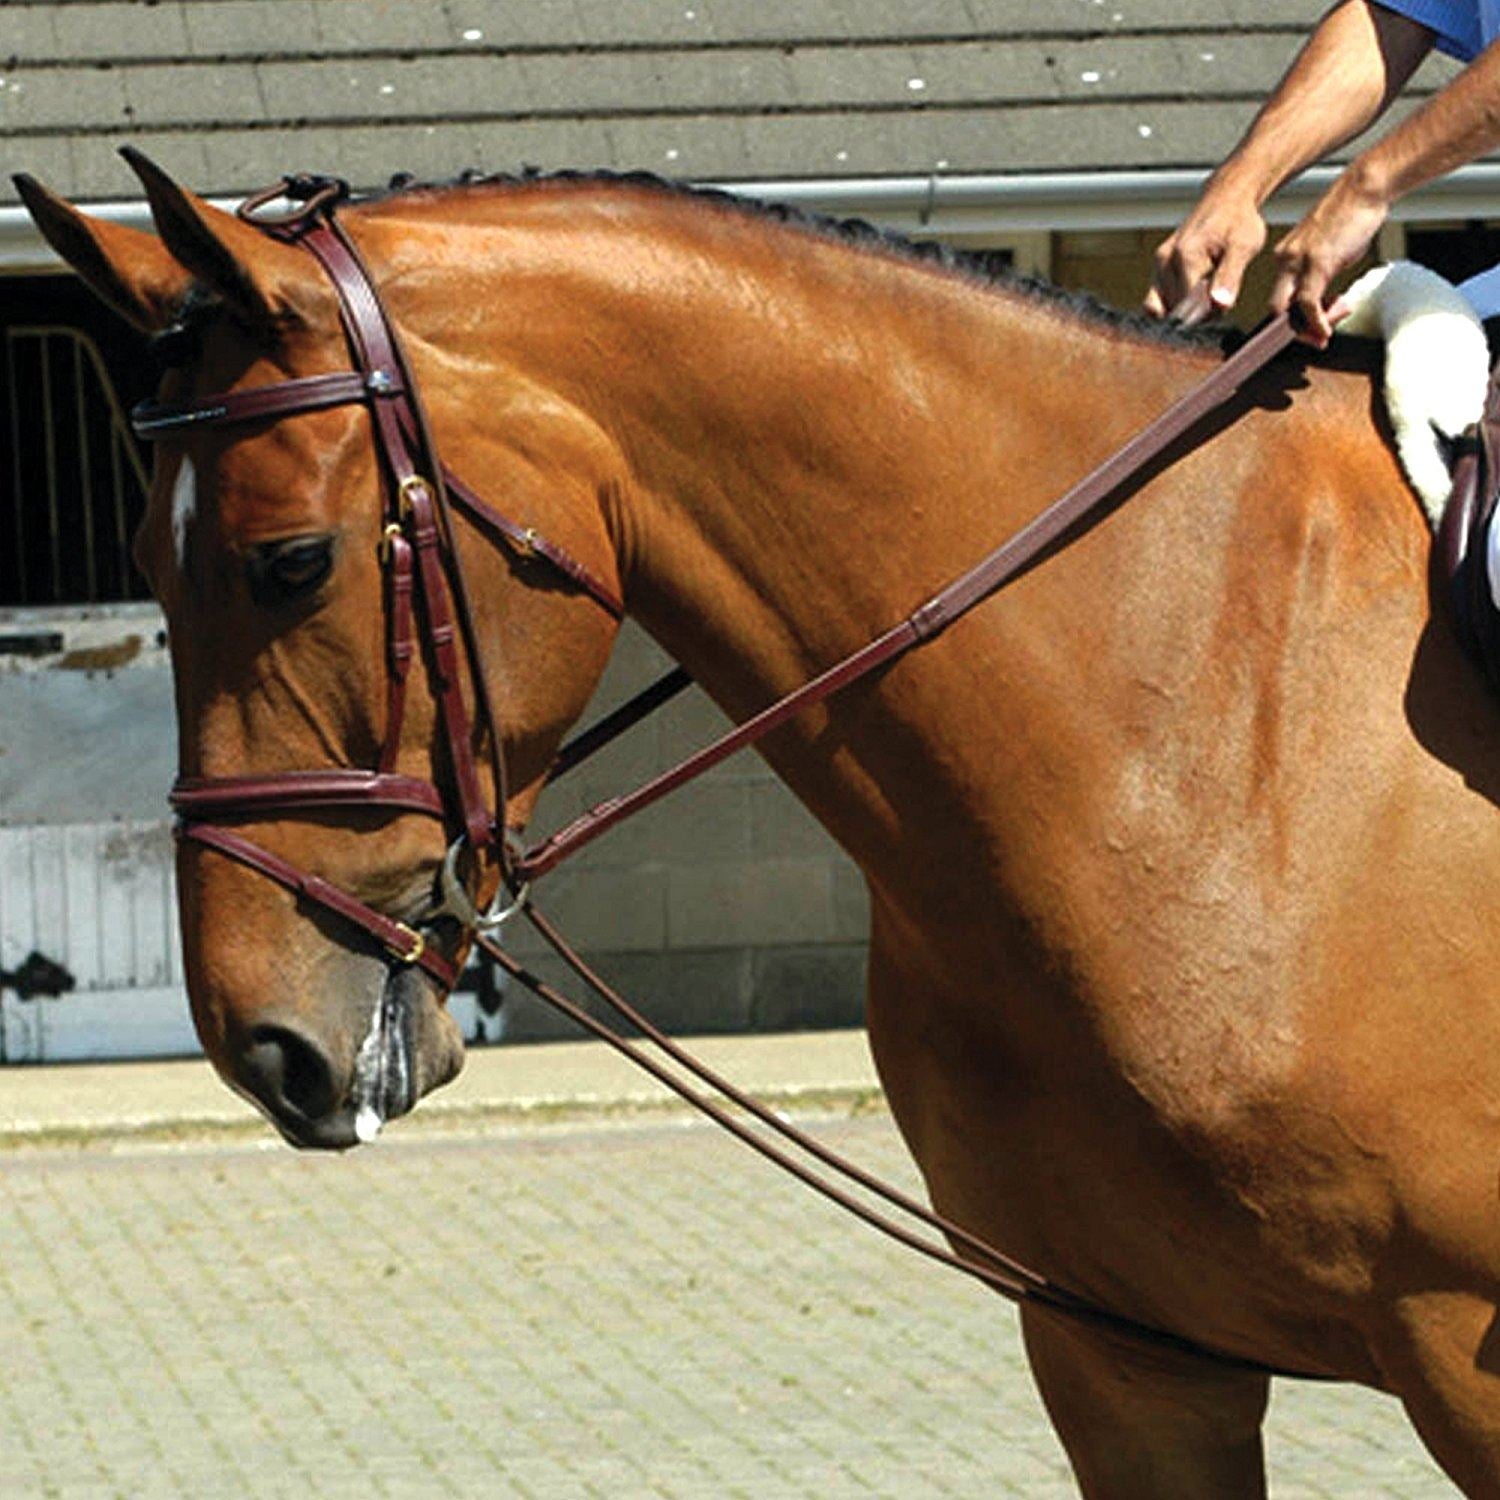 Whitaker Training Rein - Just Horse Riders